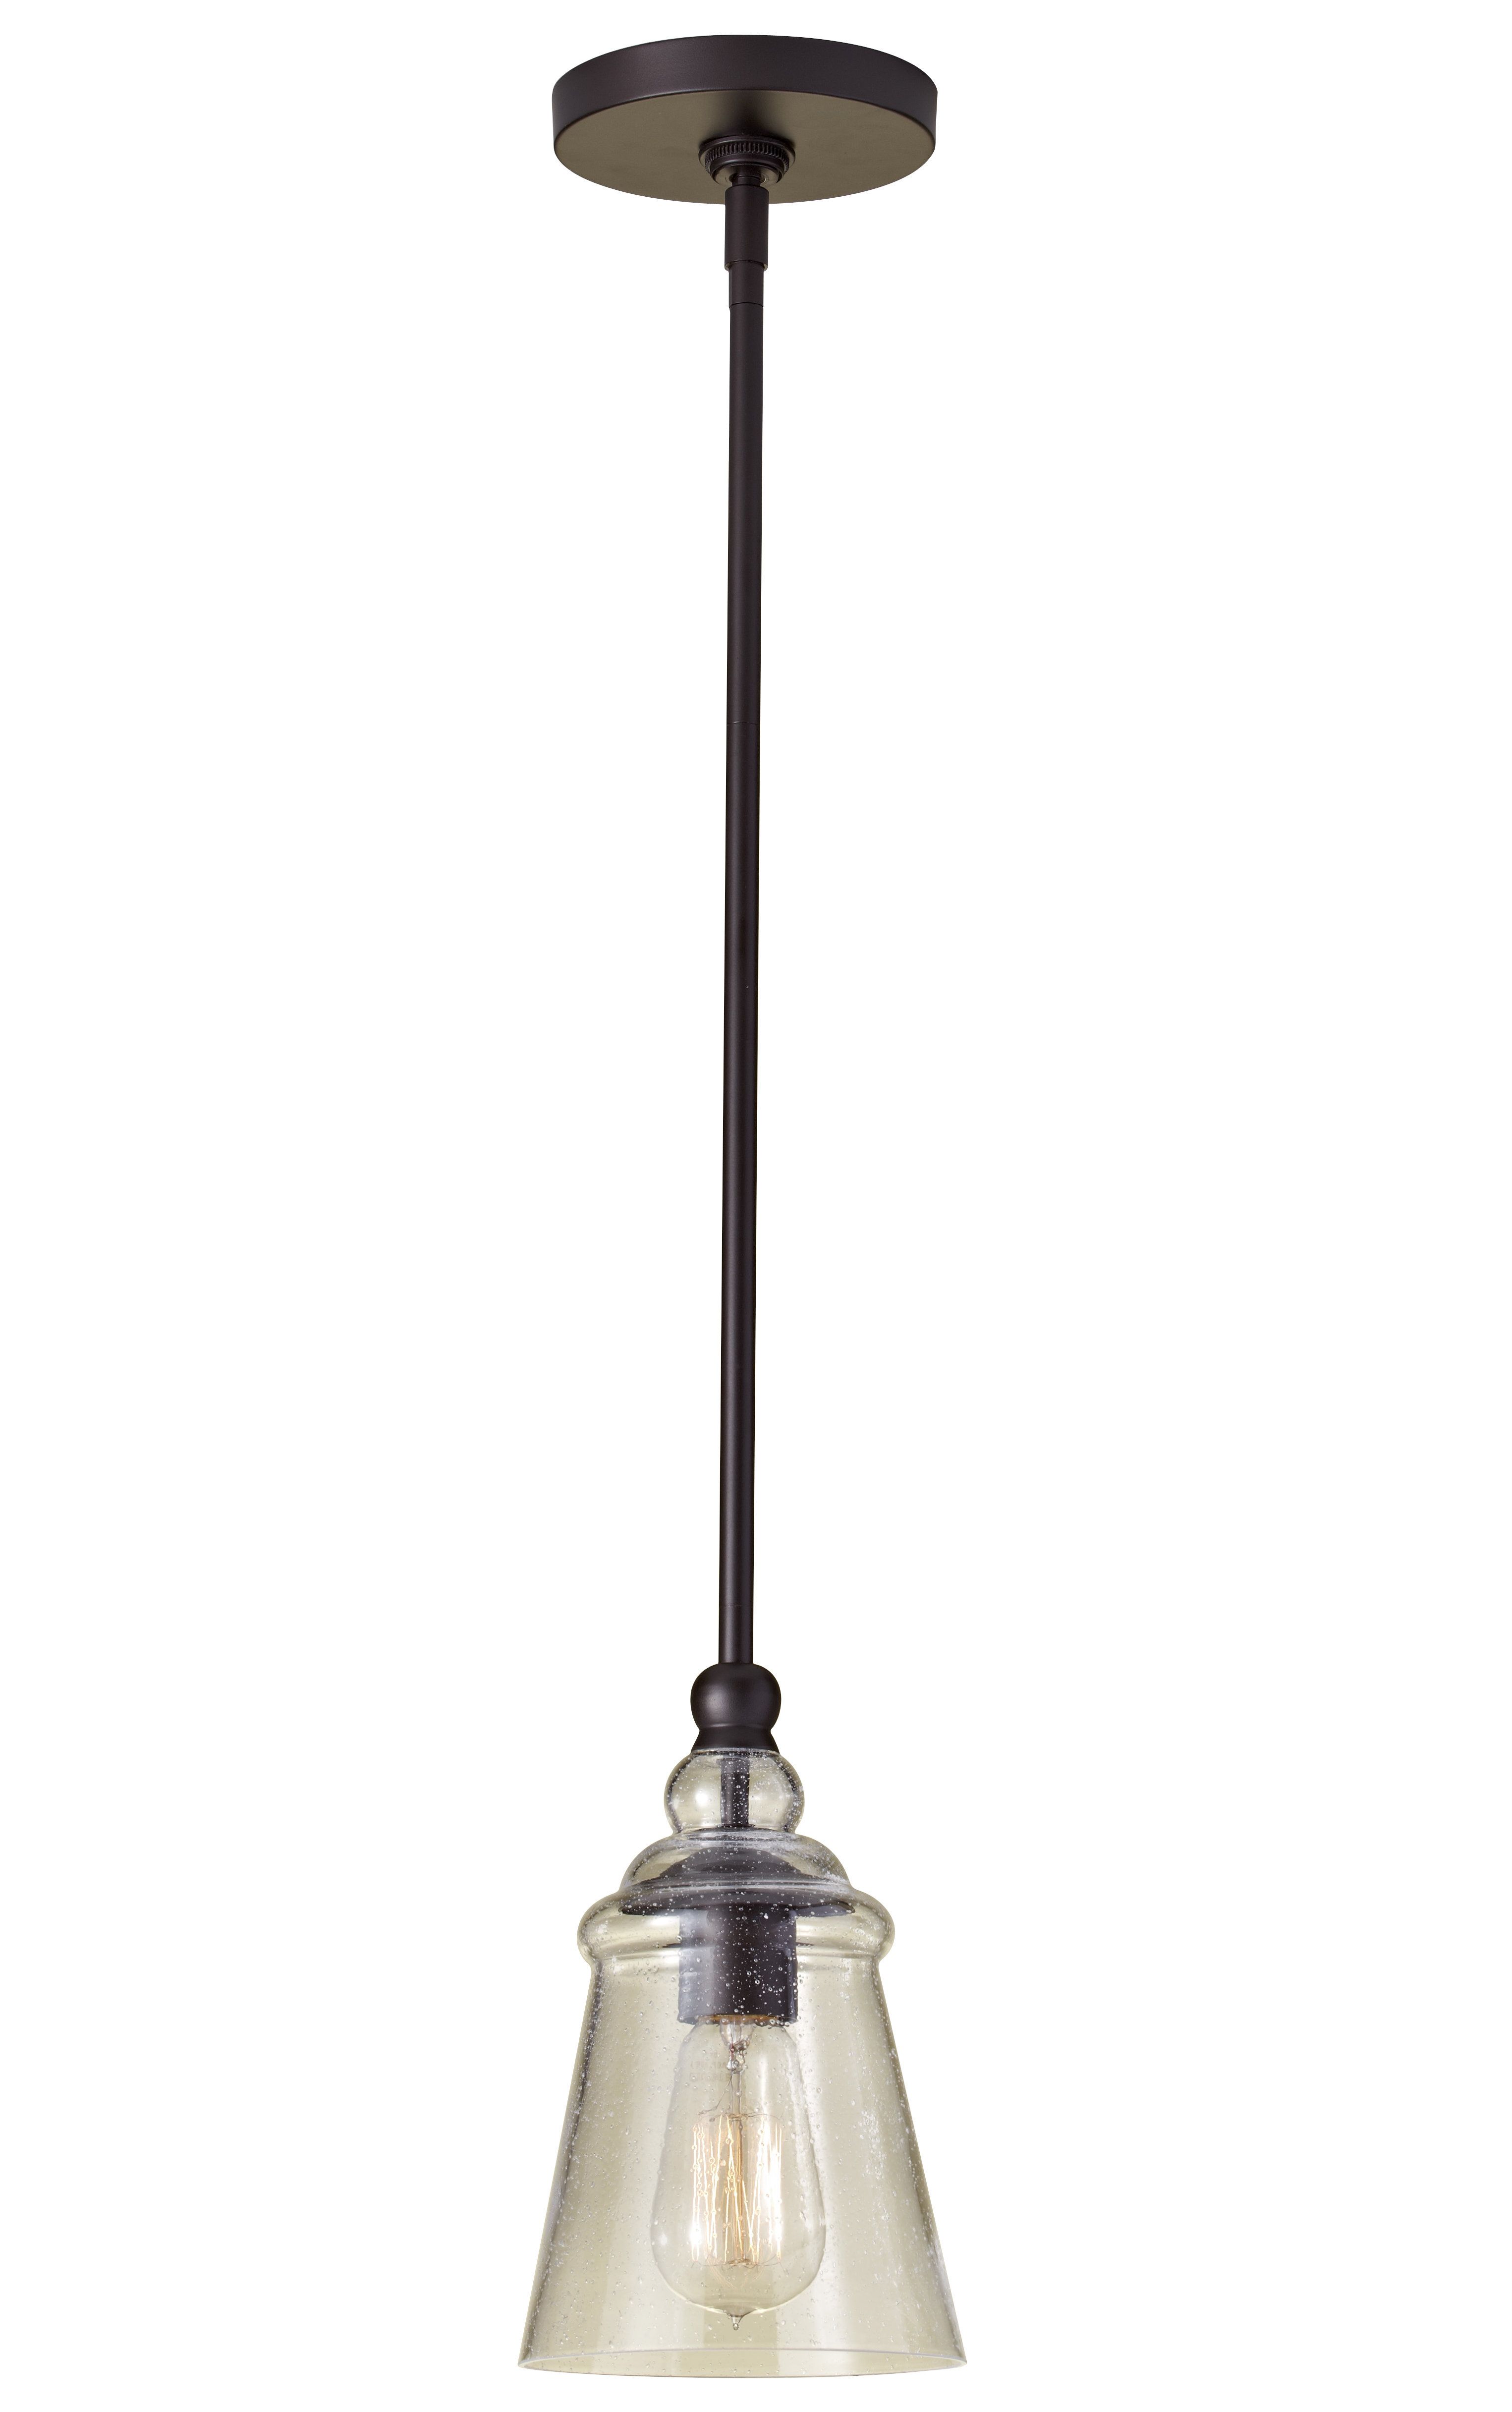 Sargent 1 Light Single Bell Pendant Intended For 1 Light Single Bell Pendants (View 2 of 30)